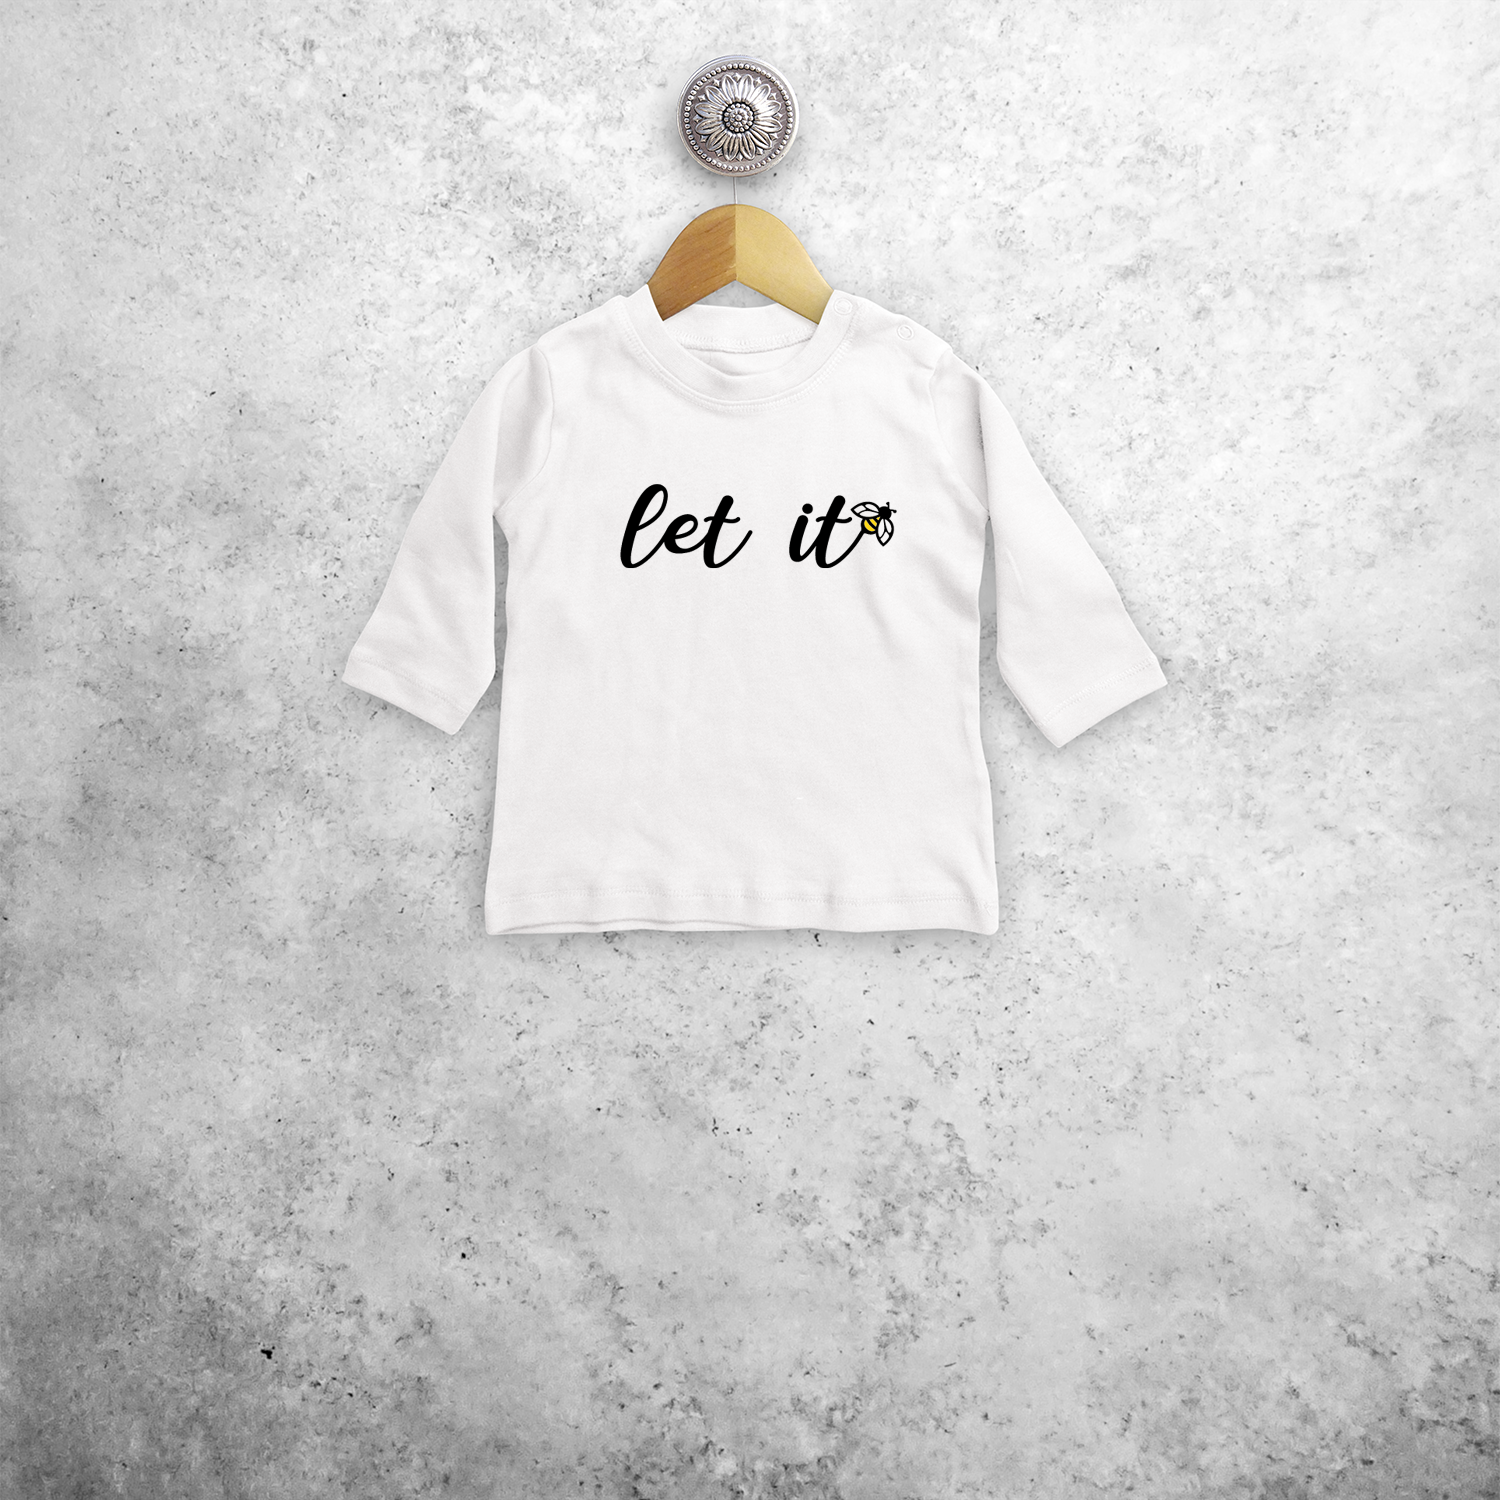 'Let it bee' baby longsleeve shirt